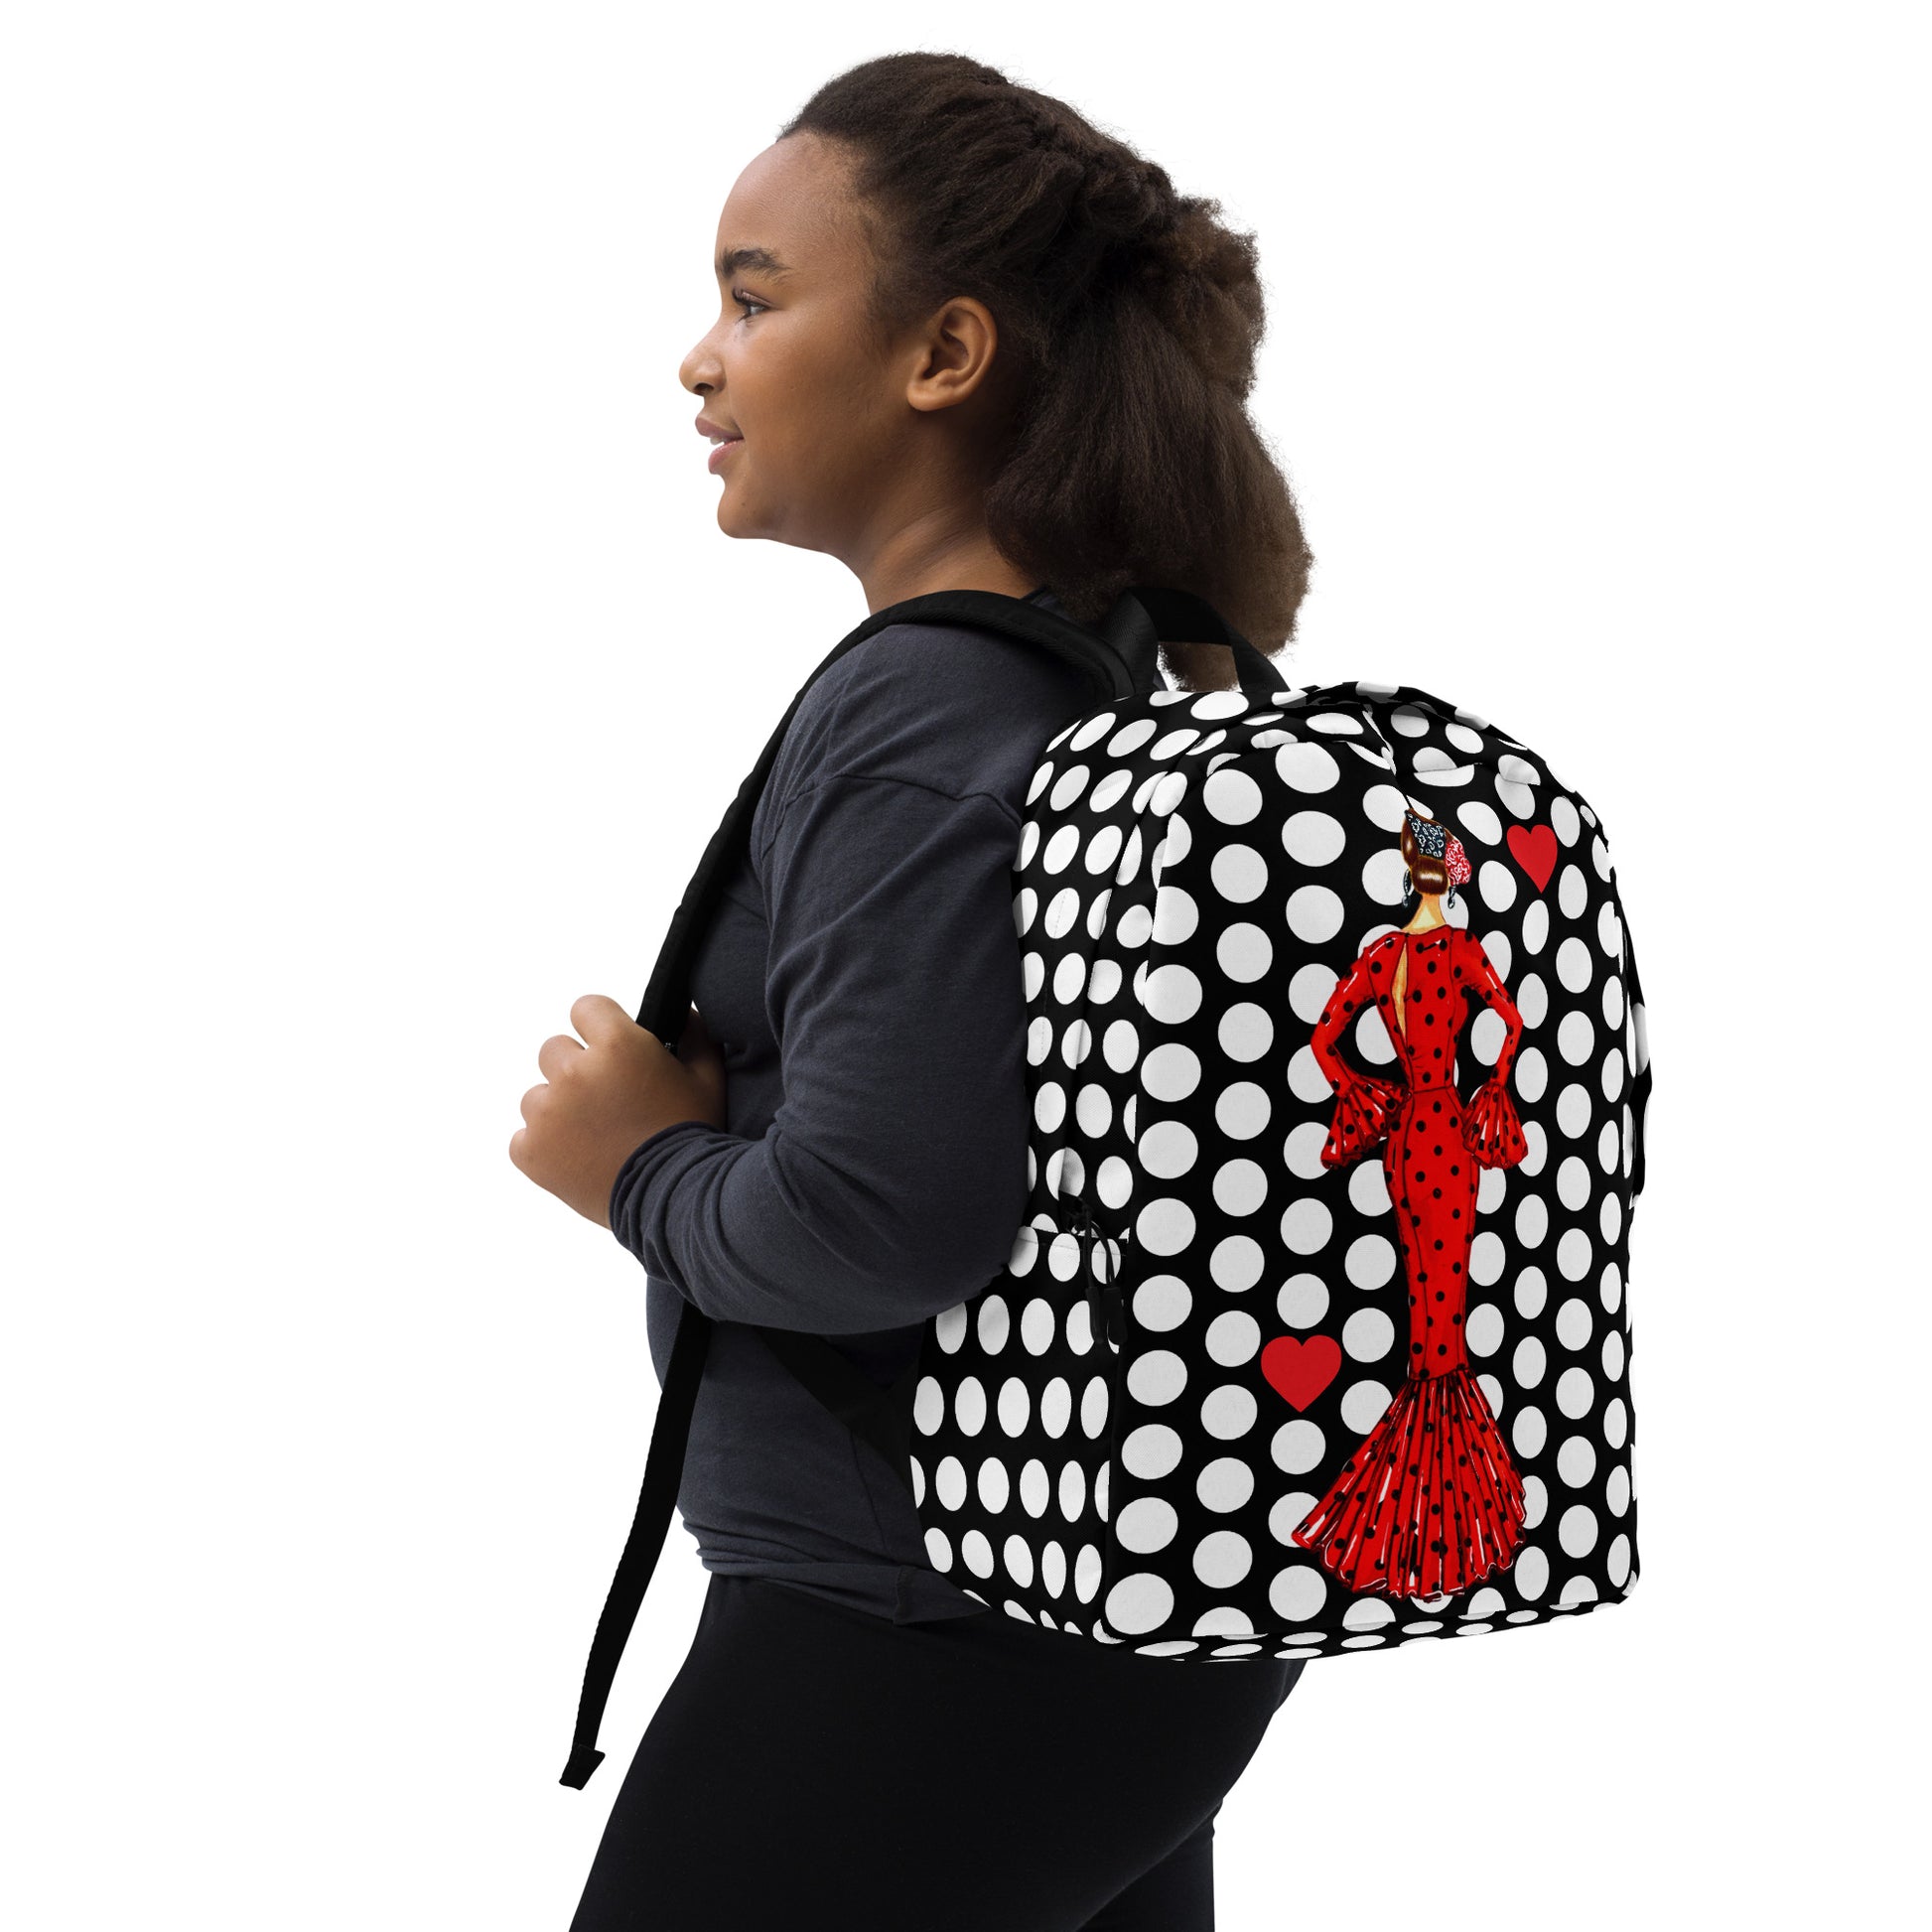 Flamenco Dancer Backpack, red dress with black polka dots on a white polka dot design. - IllustrArte